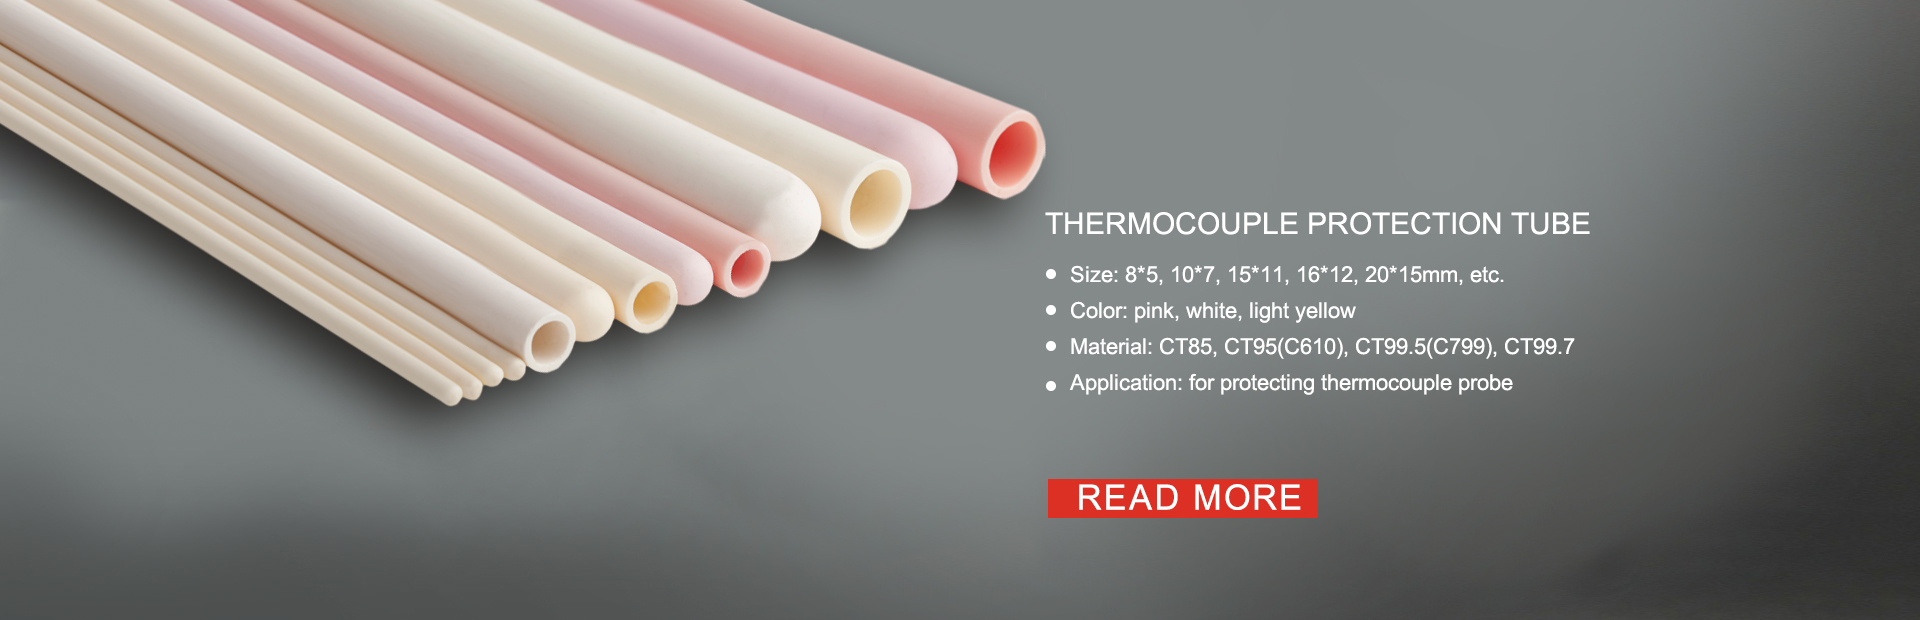 thermocouple tube